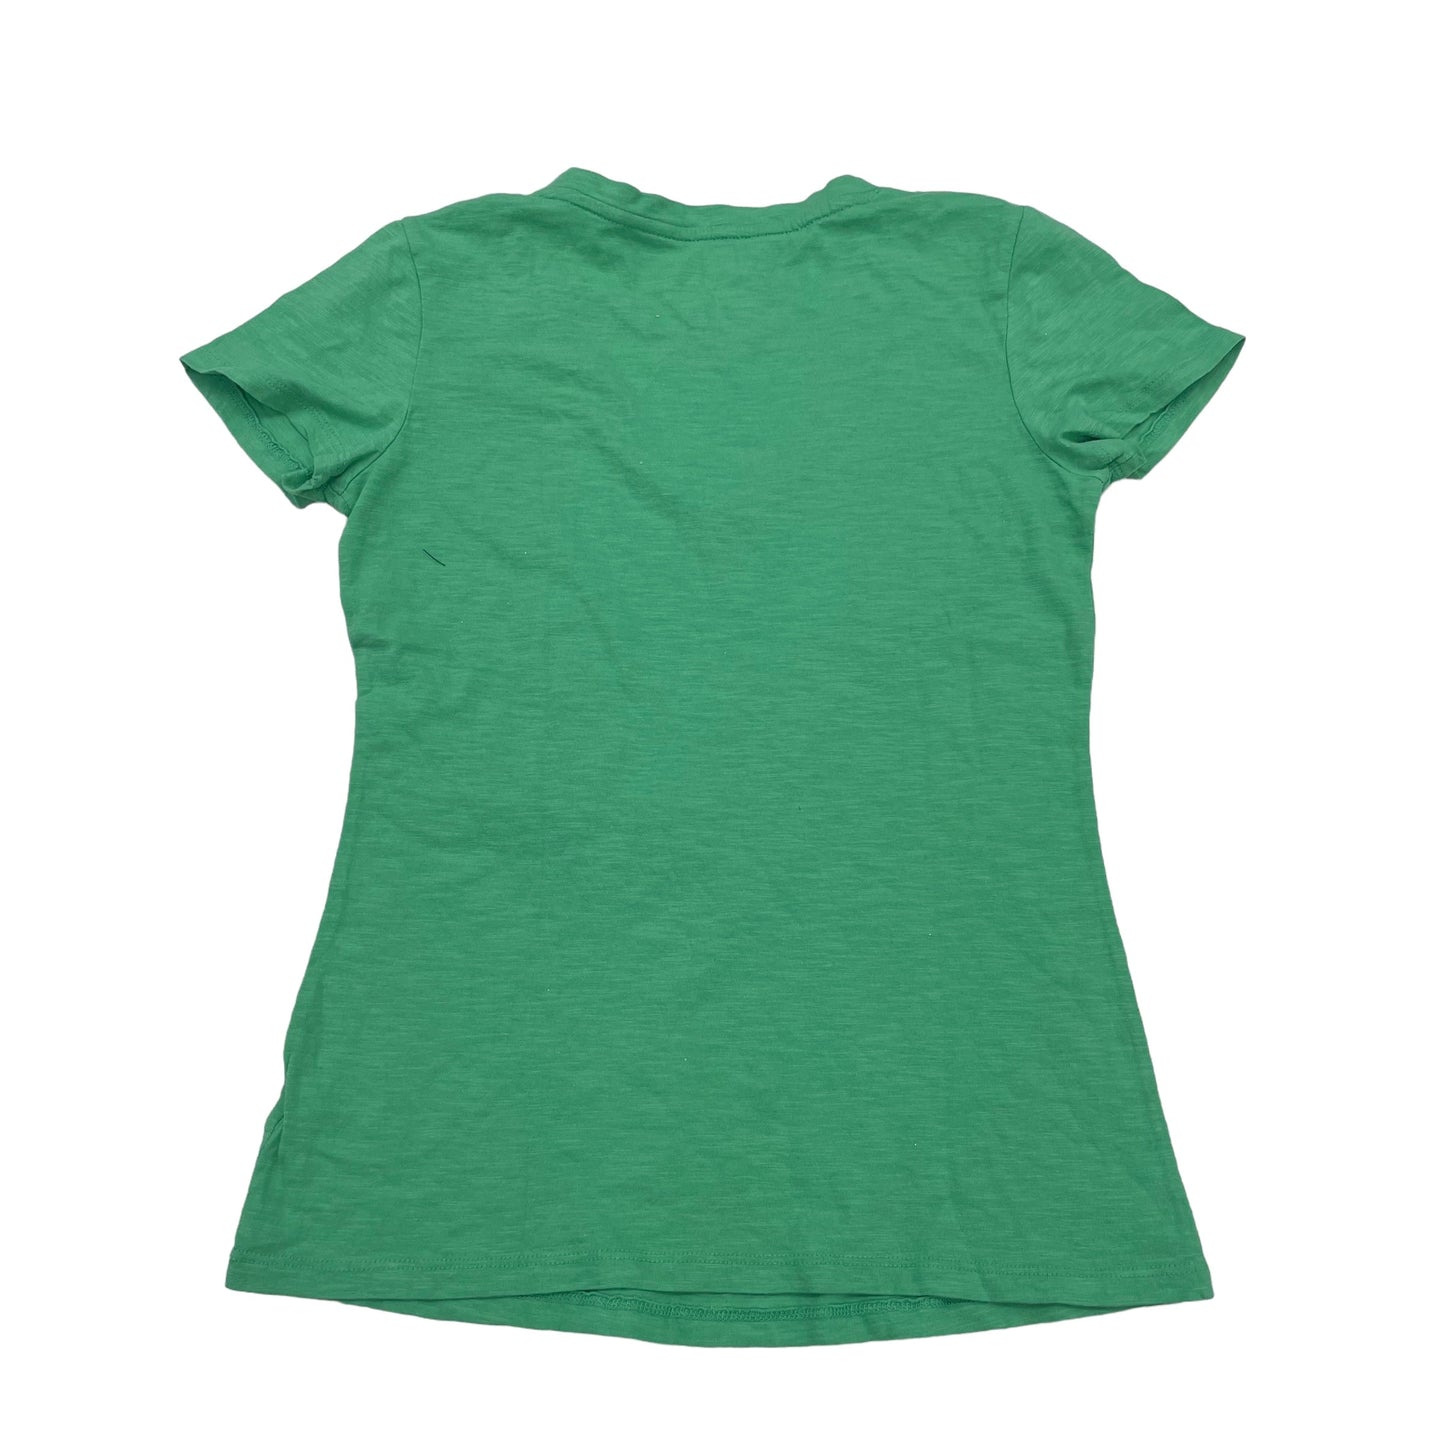 Green Top Short Sleeve Universal Thread, Size S